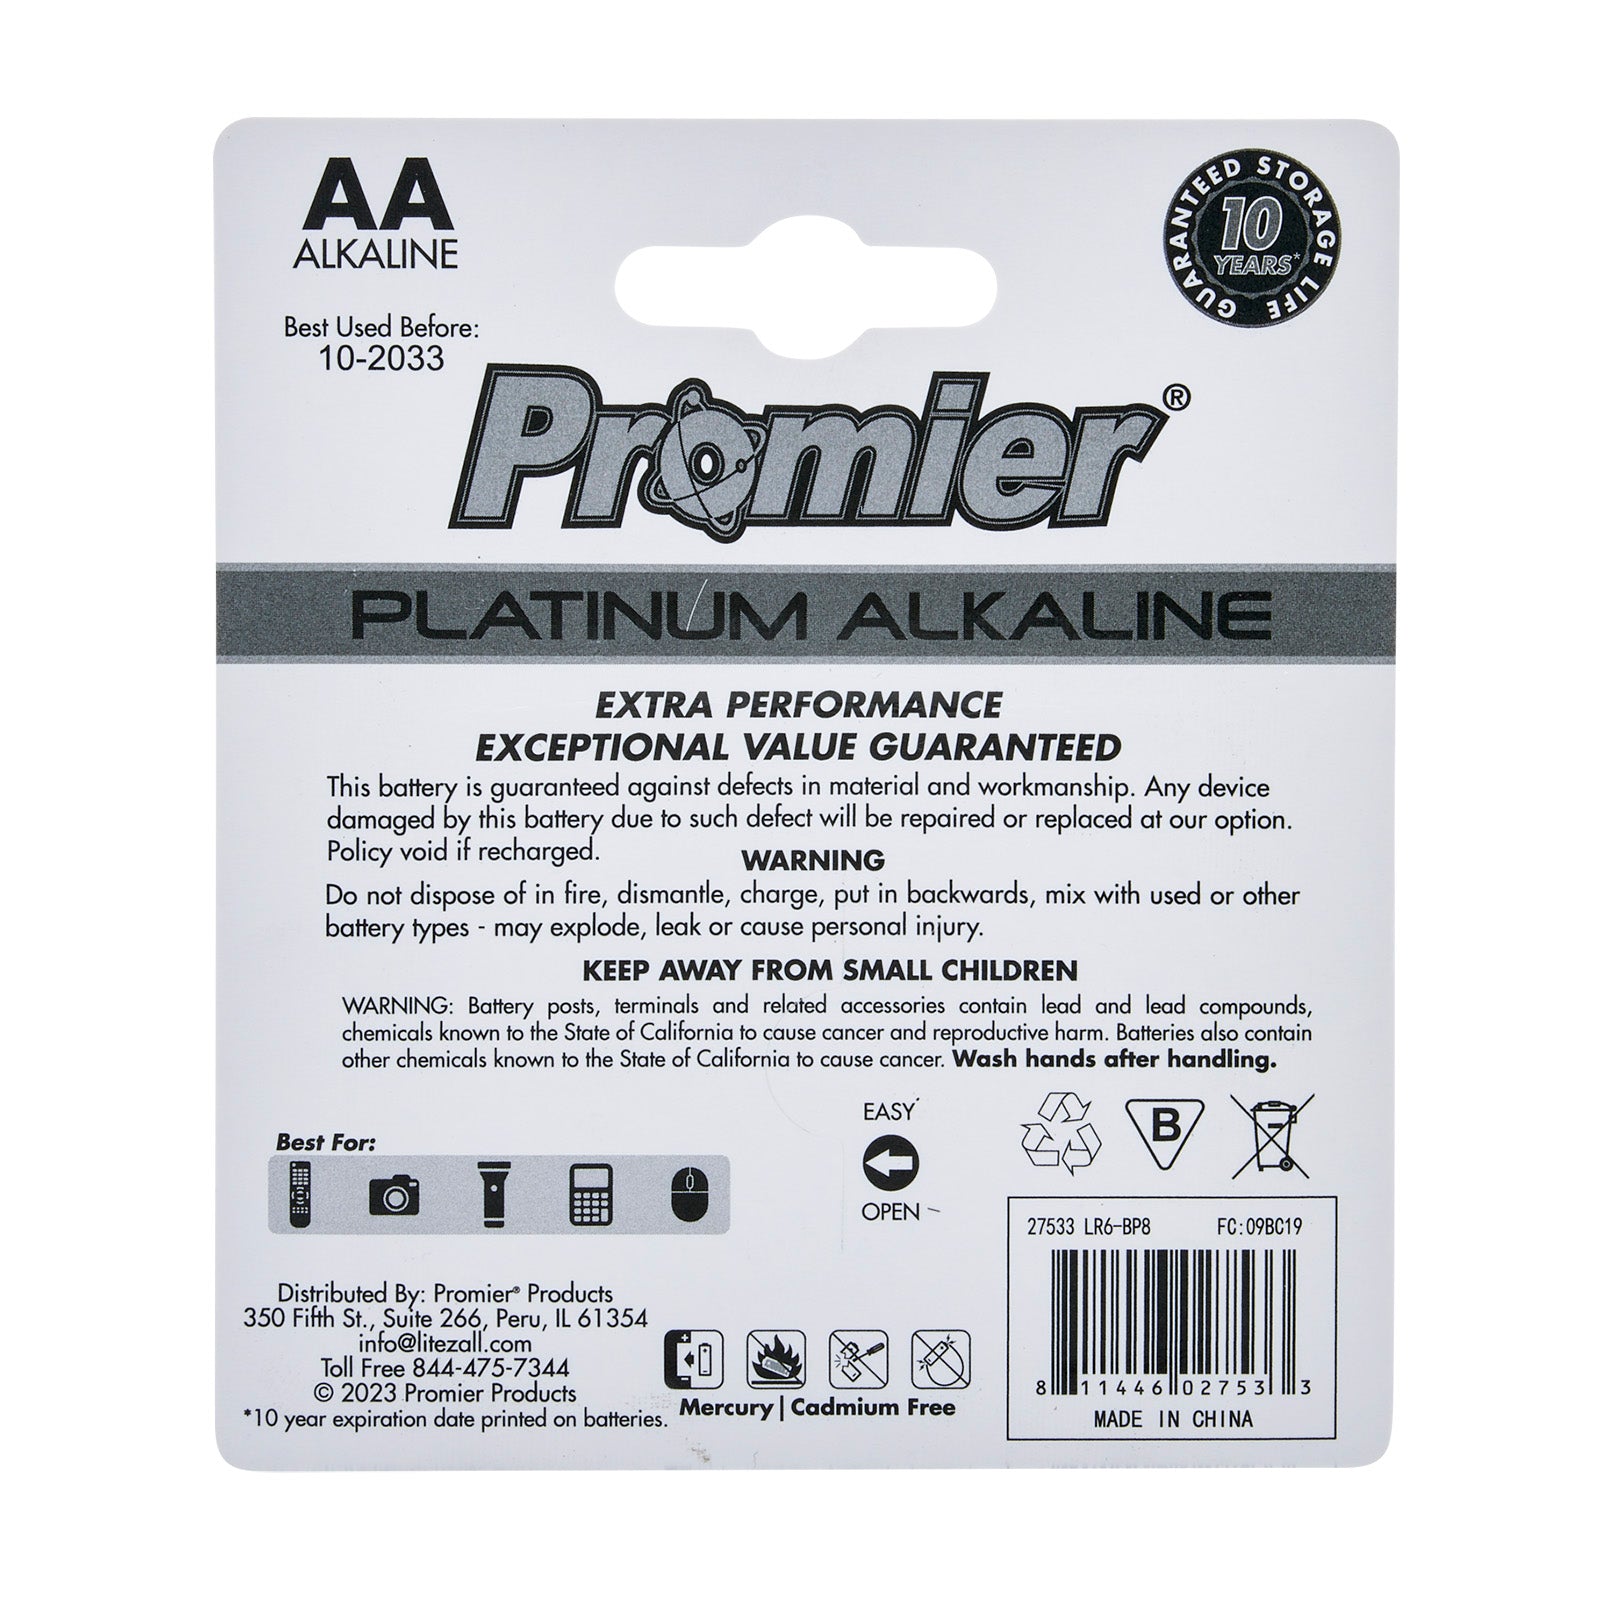 Promier® AA Alkaline 8 Pack